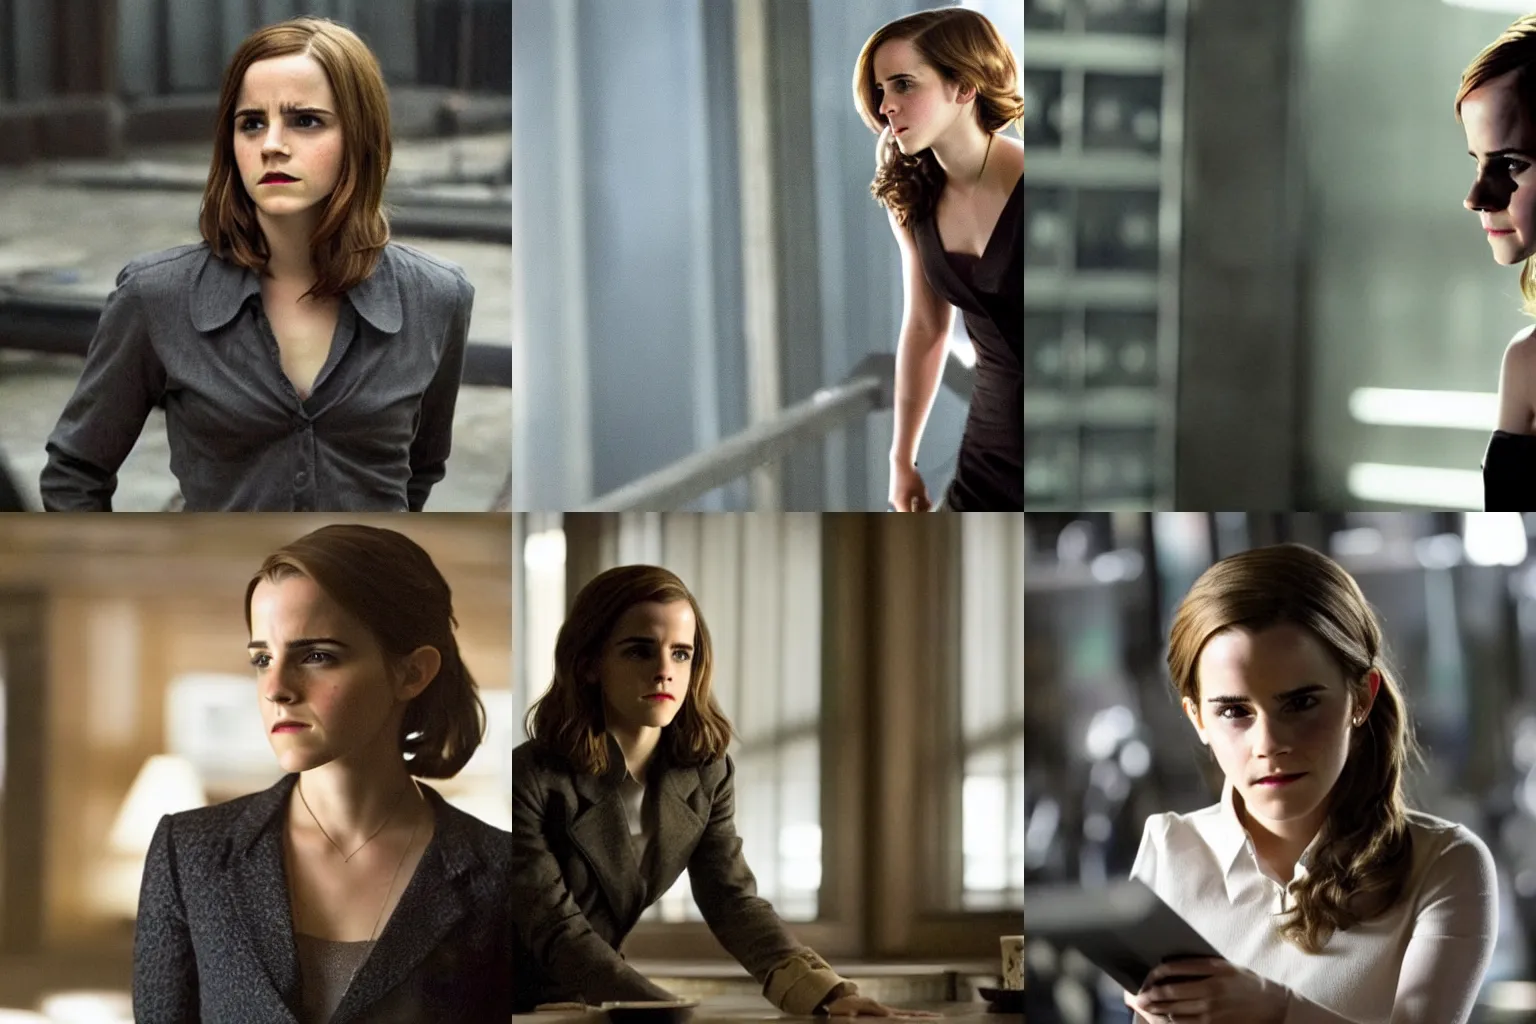 Prompt: Movie still of Emma Watson in Inception